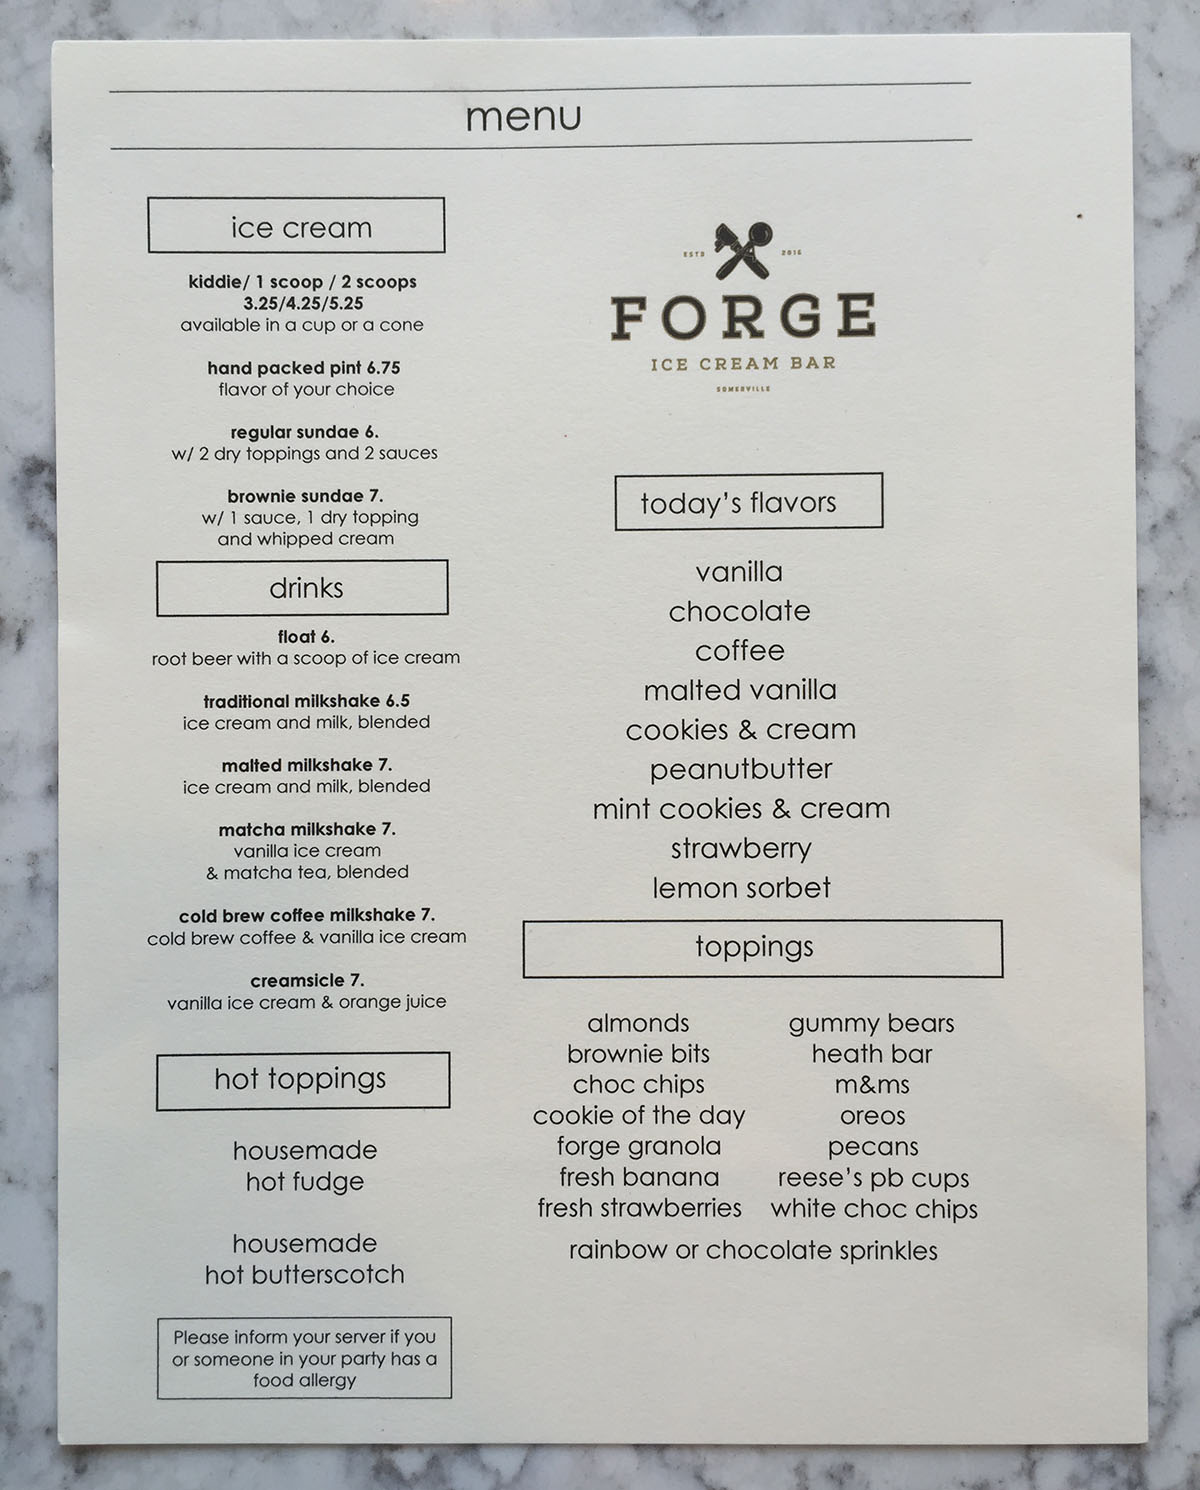 Forge Ice Cream opening menu